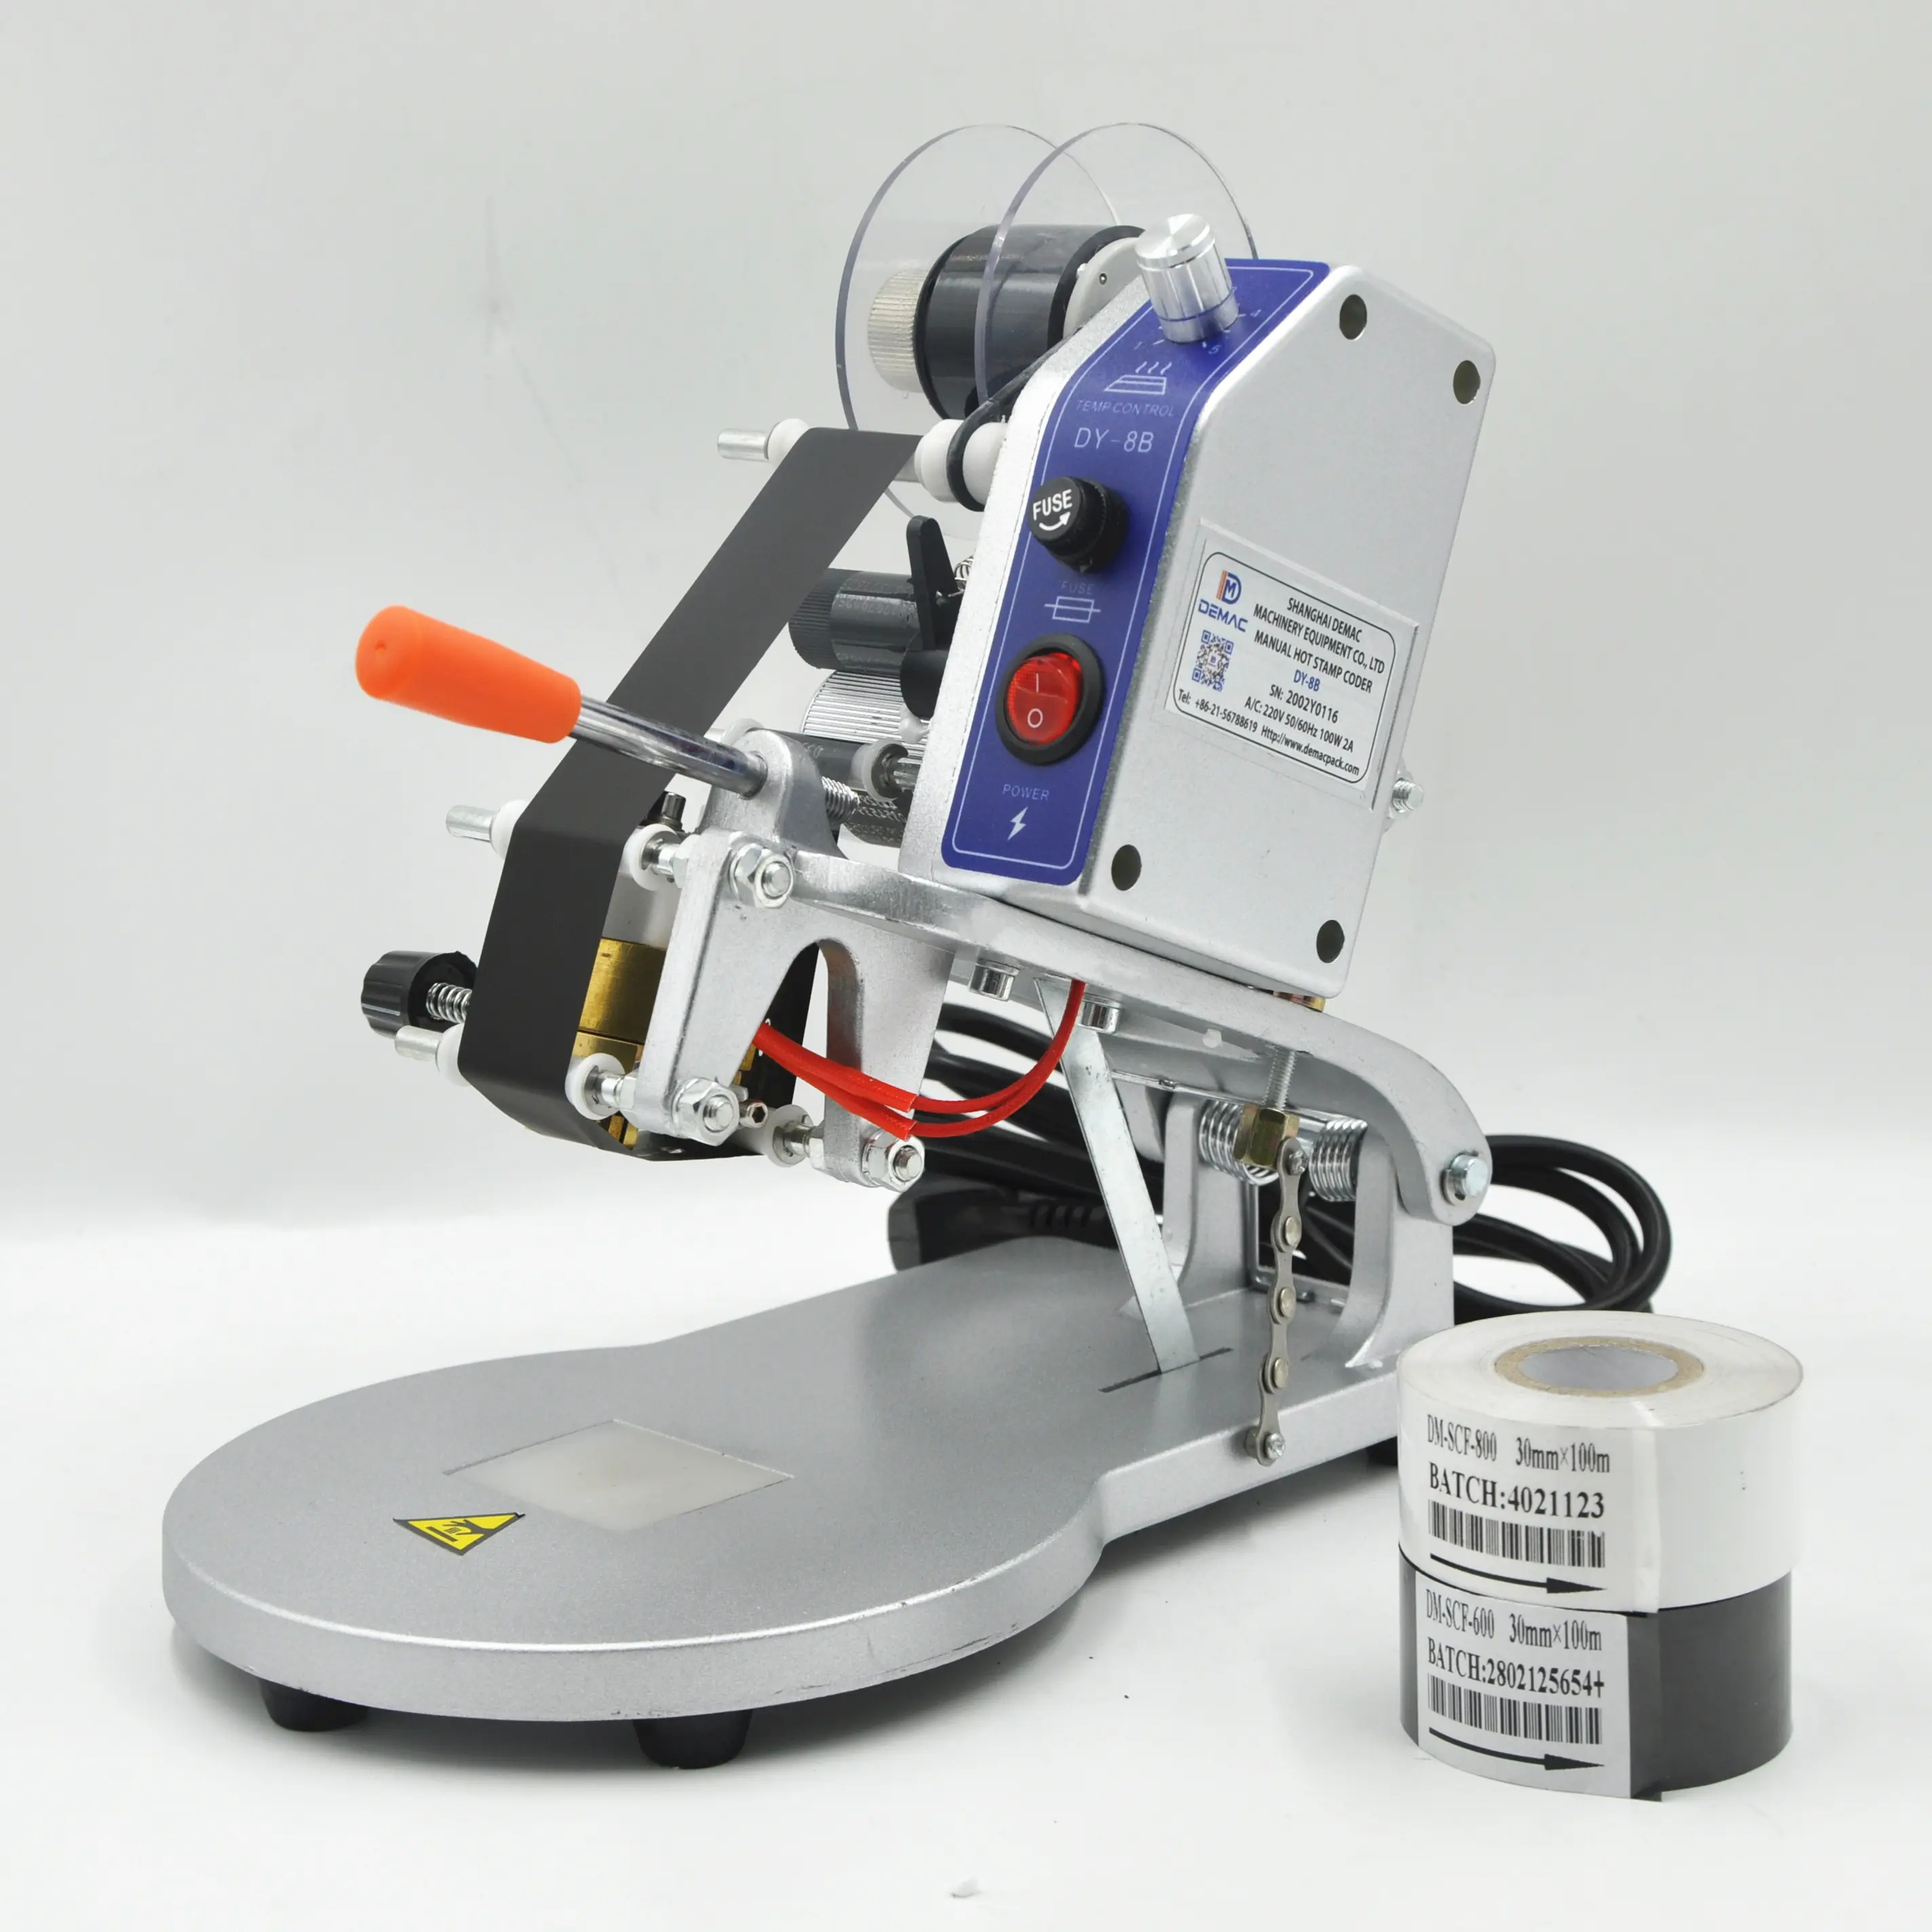 Manual Foliedruk Machine DY-8 Handmatige Codering Machine Lint Printer Handleiding Dating Machine